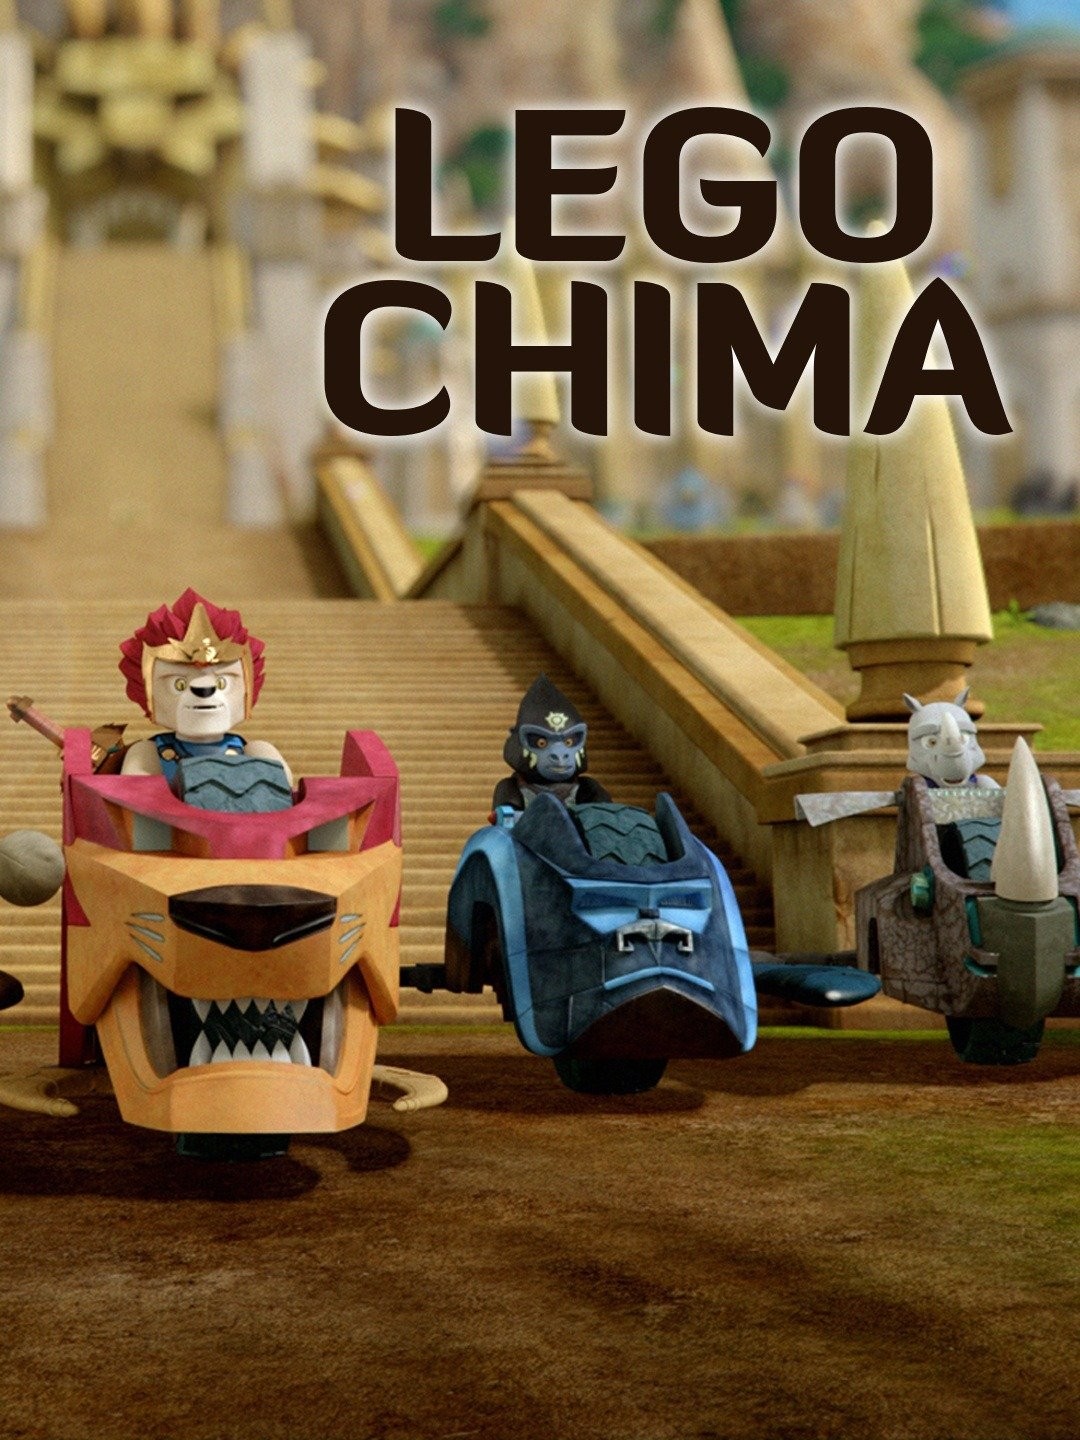 LEGO Chima  Rotten Tomatoes